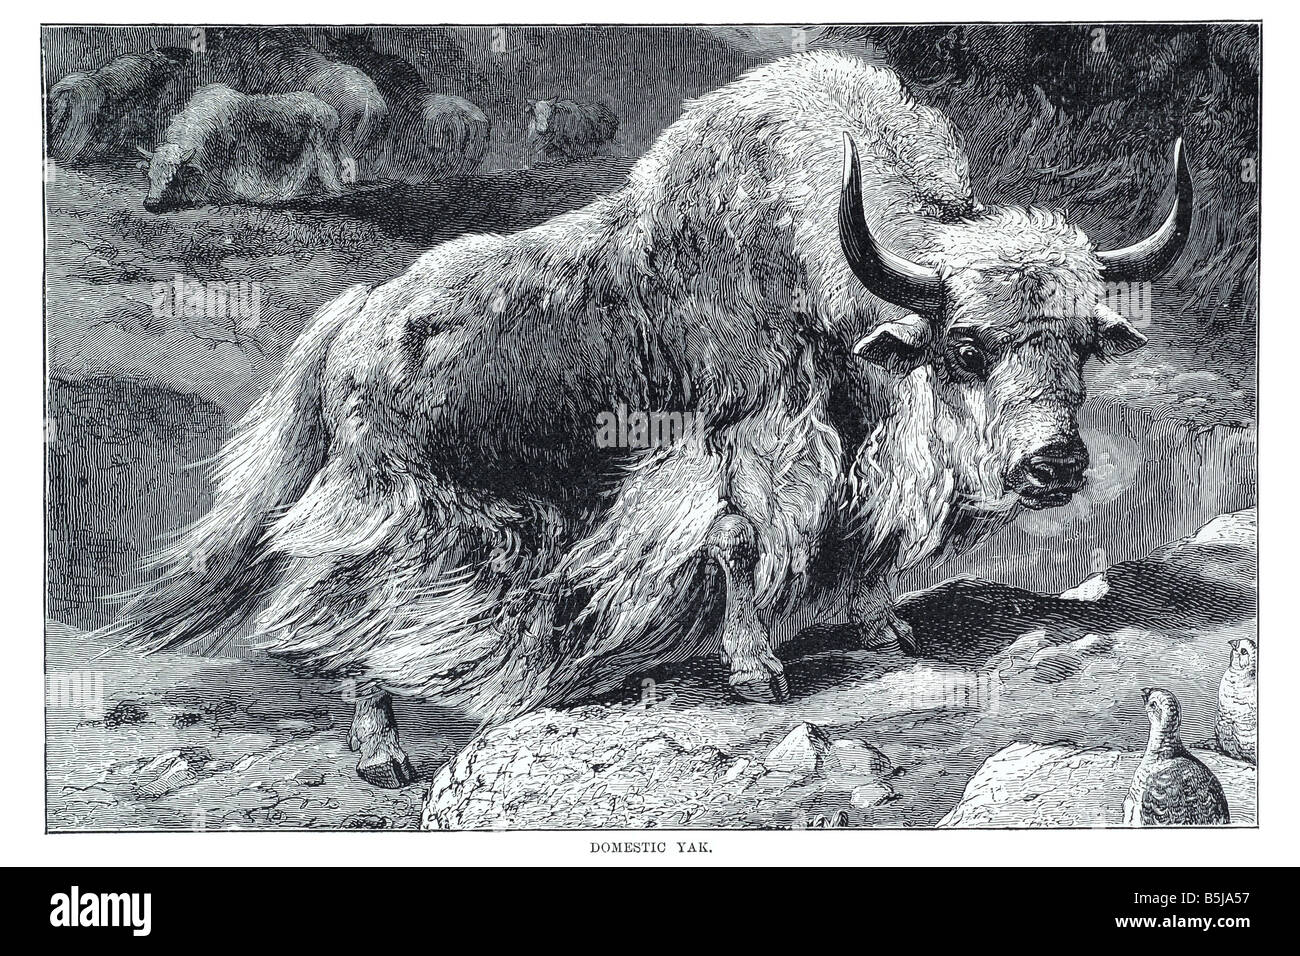 yak Bos grunniens Richard Lydekker 1849 1915 English naturalist, geologist writer book London Geological Survey India vertebrate Stock Photo